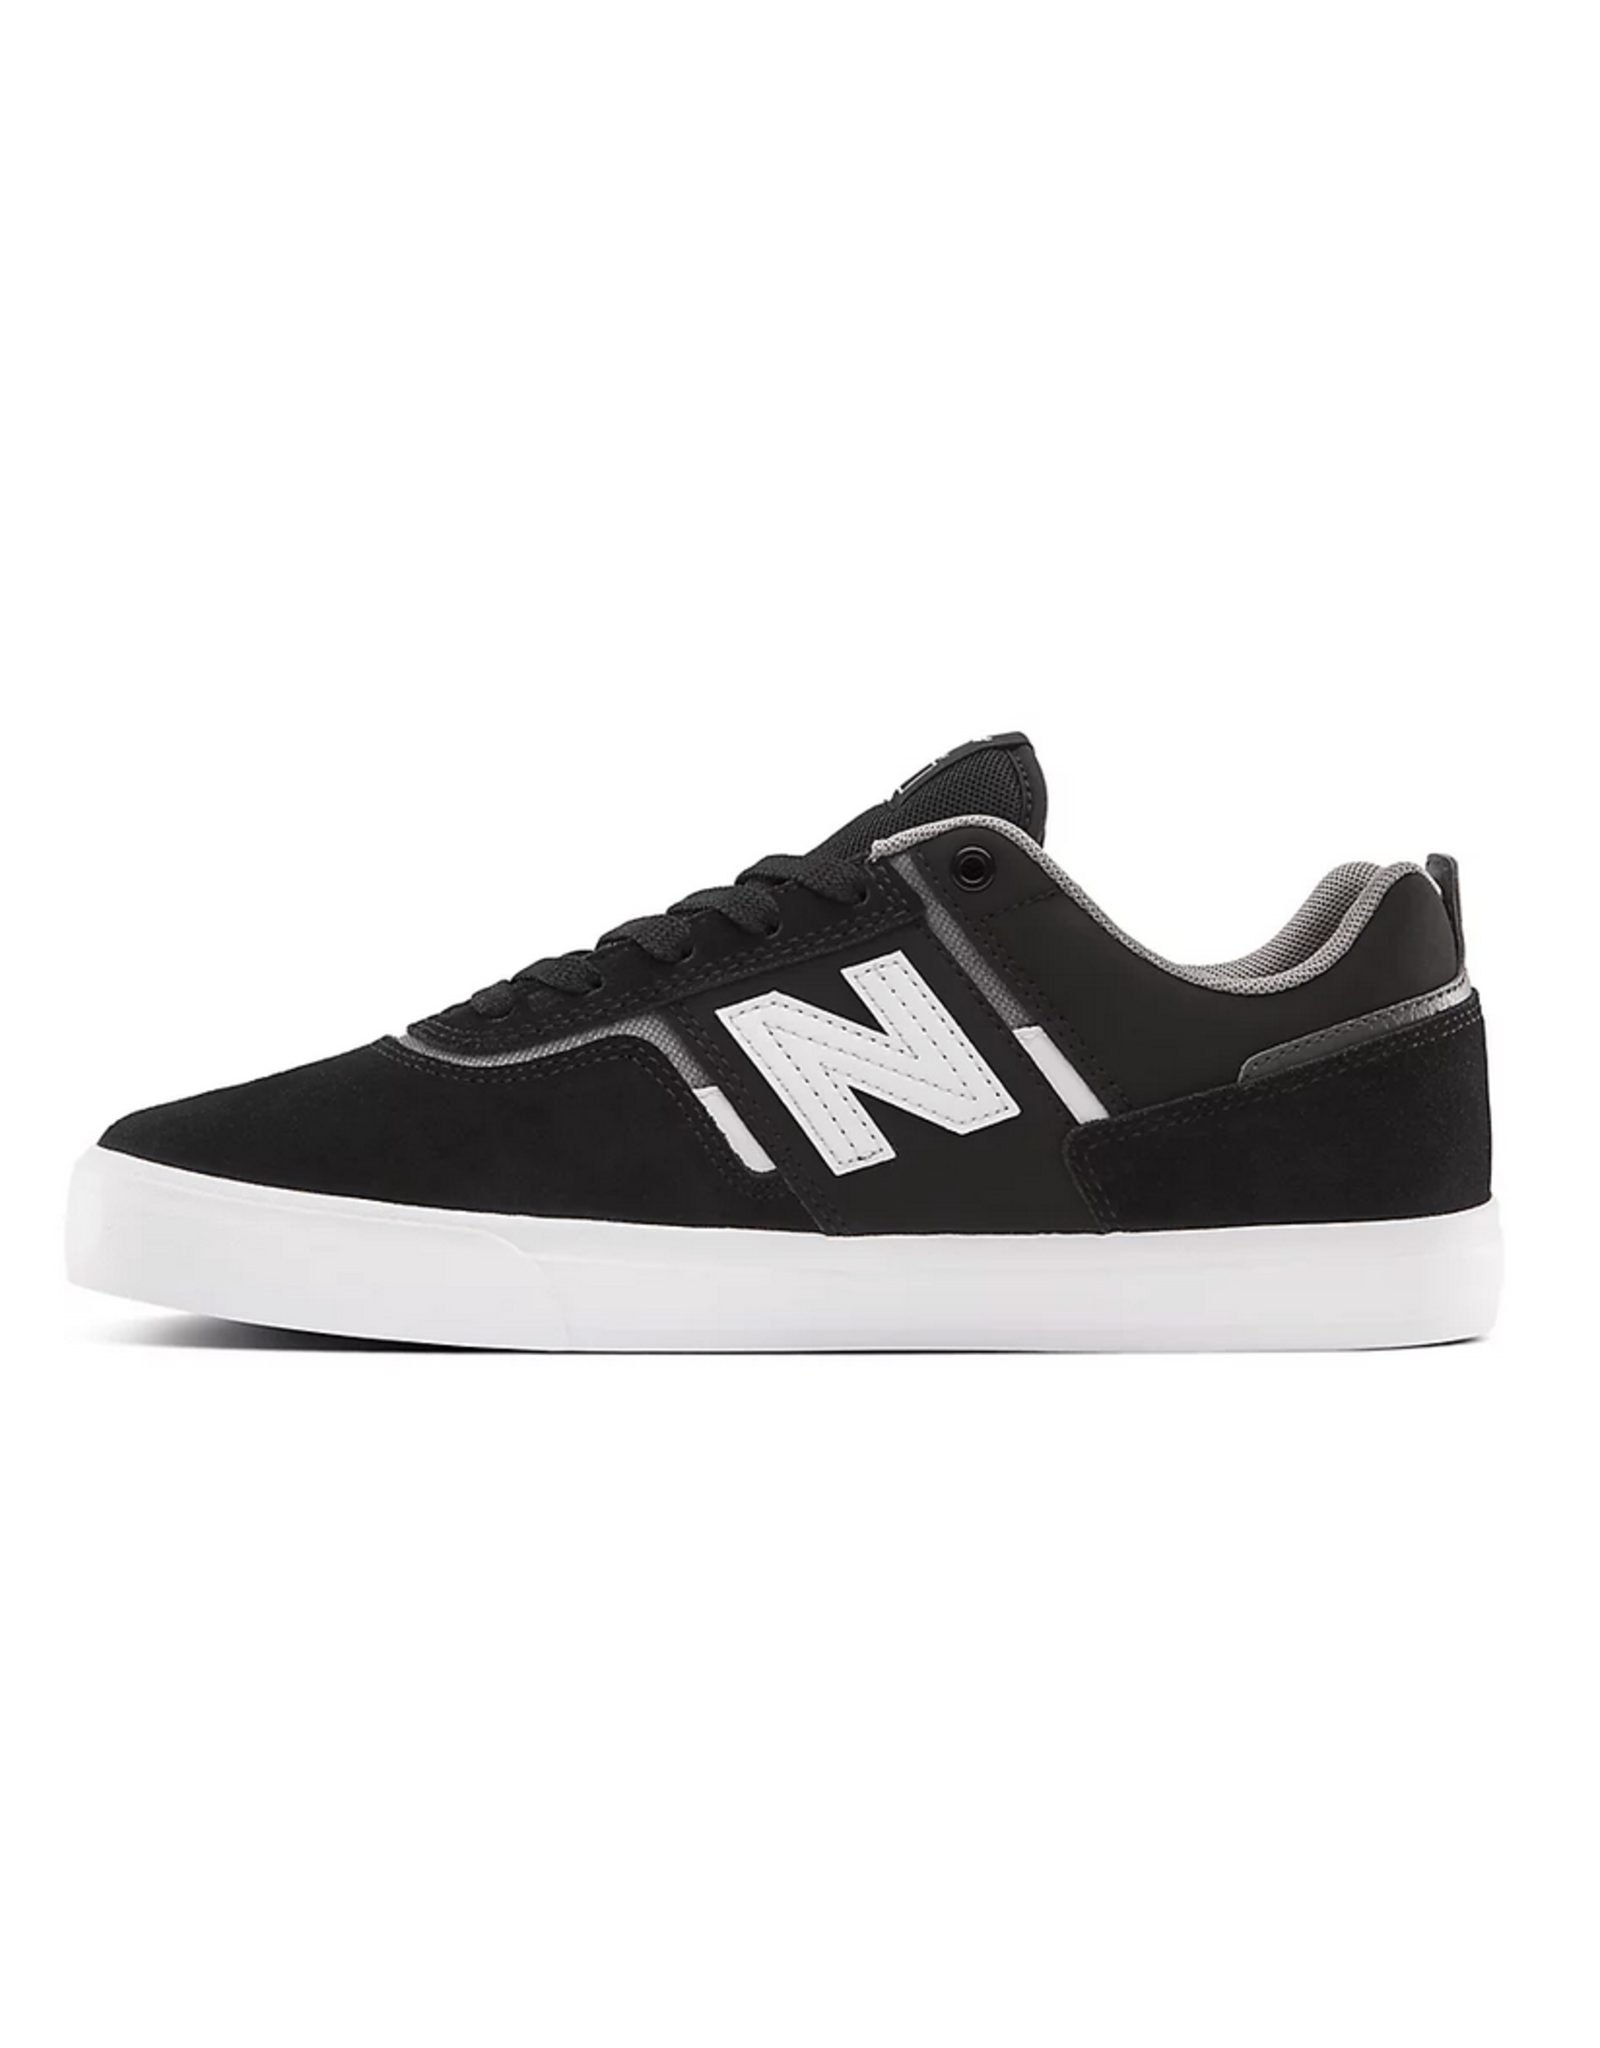 New Balance Men's Numeric Jamie Foy 306 Shoes Black with White